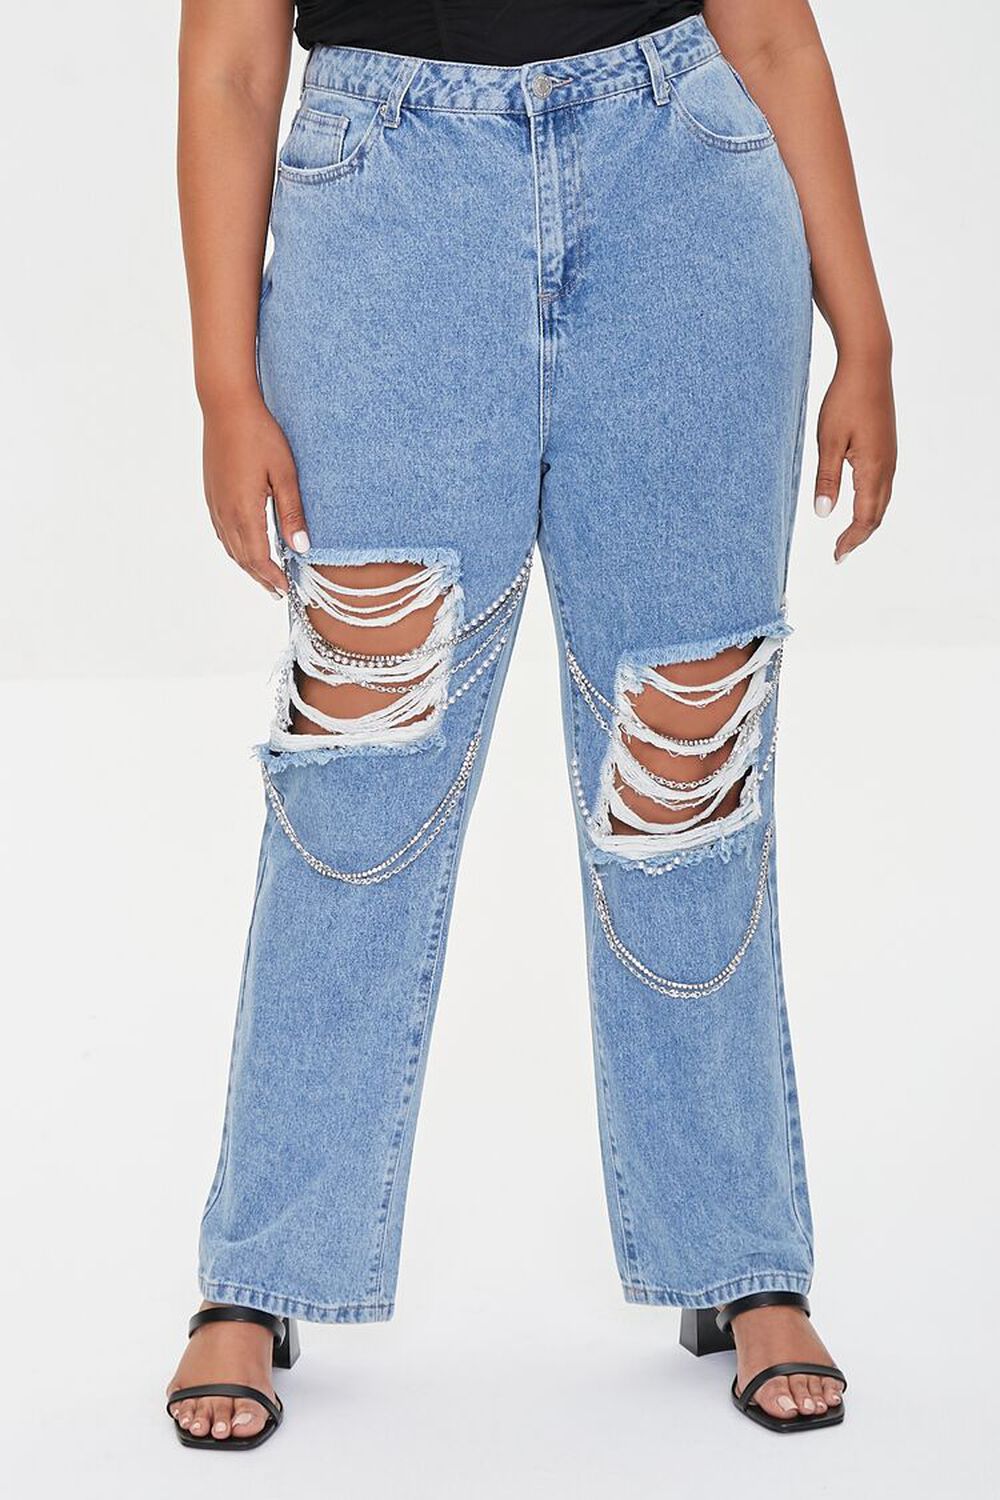 MEDIUM DENIM Plus Size Distressed Chain Jeans, image 2